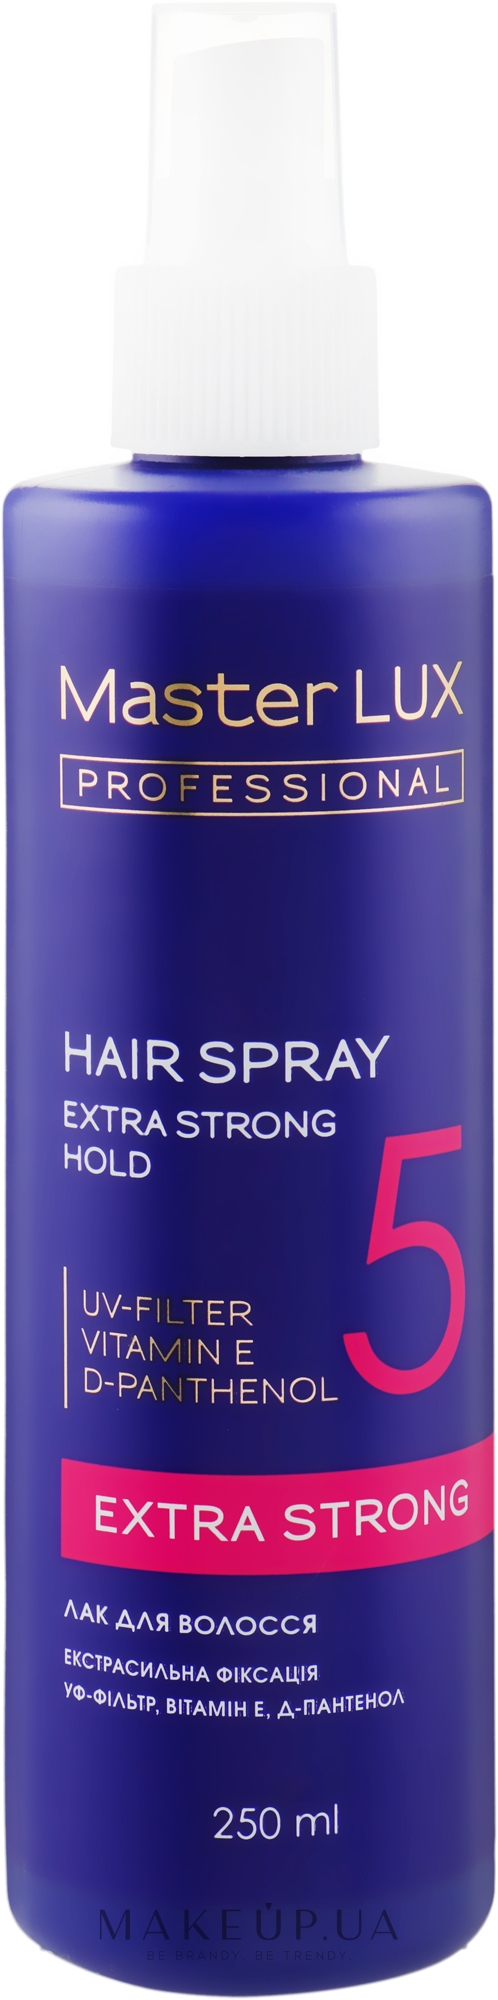 Лак для волосся екстрасильної фіксації - Master LUX Professional Extra Strong Hair Spray — фото 250ml